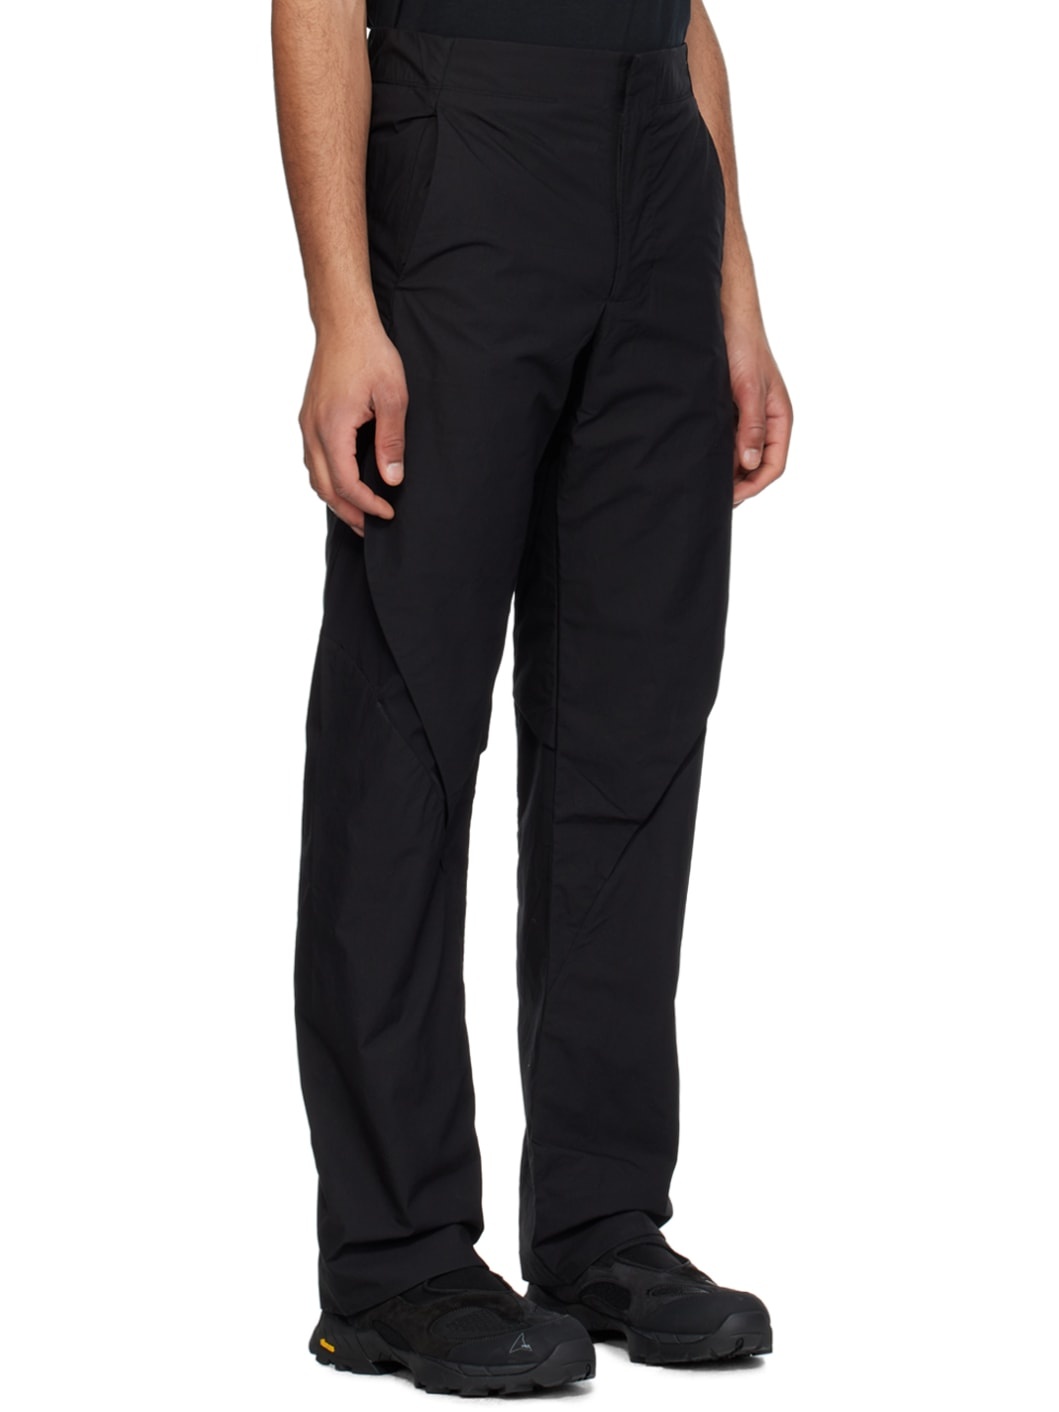 Black 6.0 Center Technical Trousers - 2